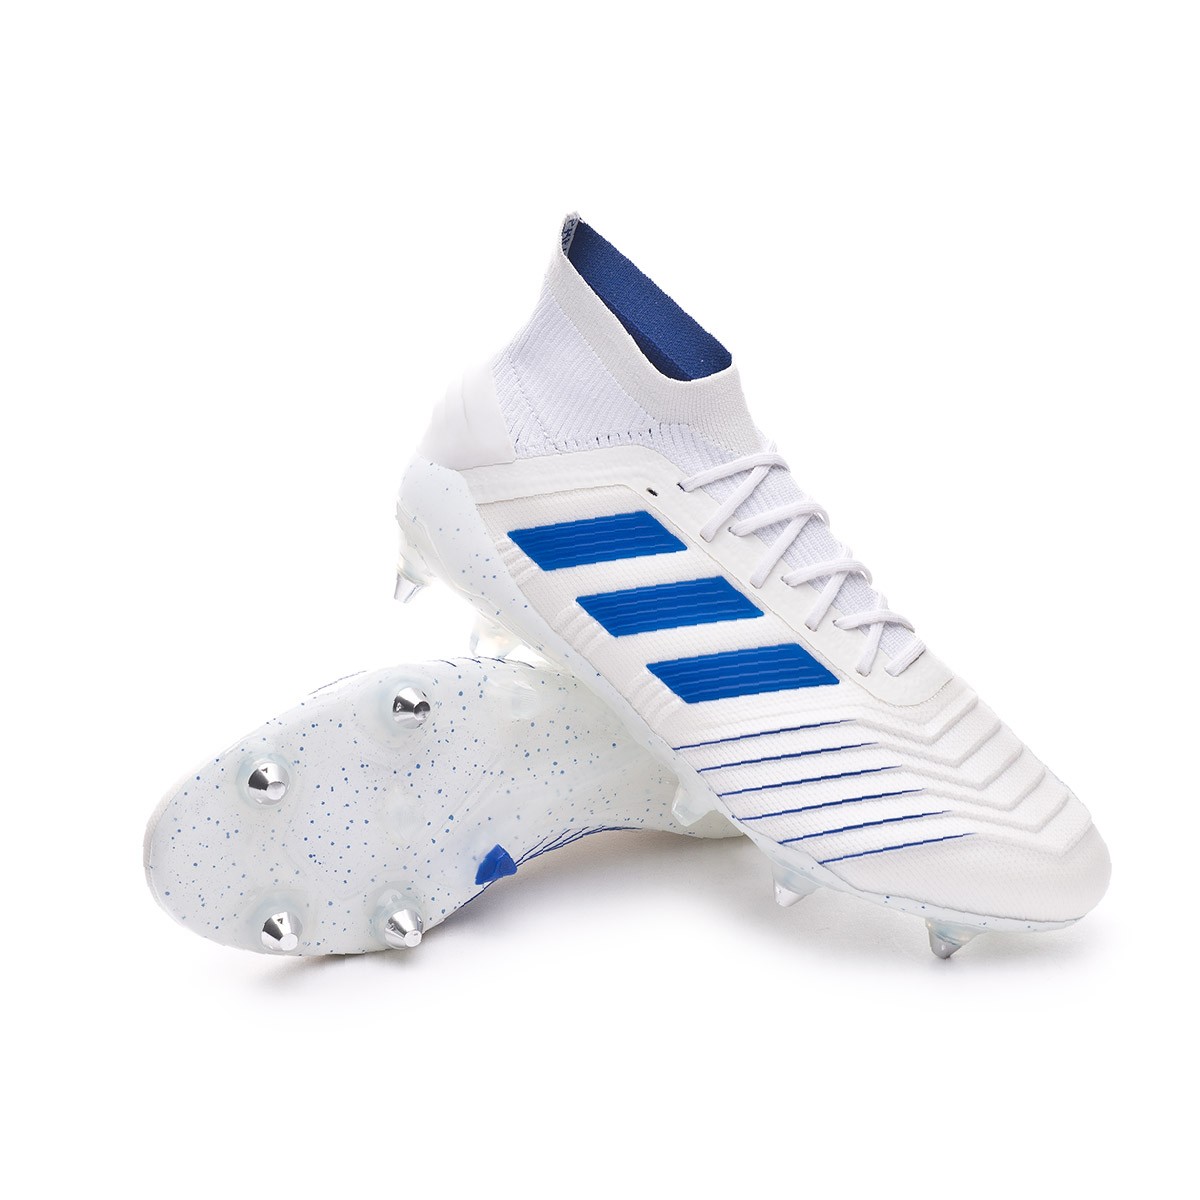 adidas sg football boots